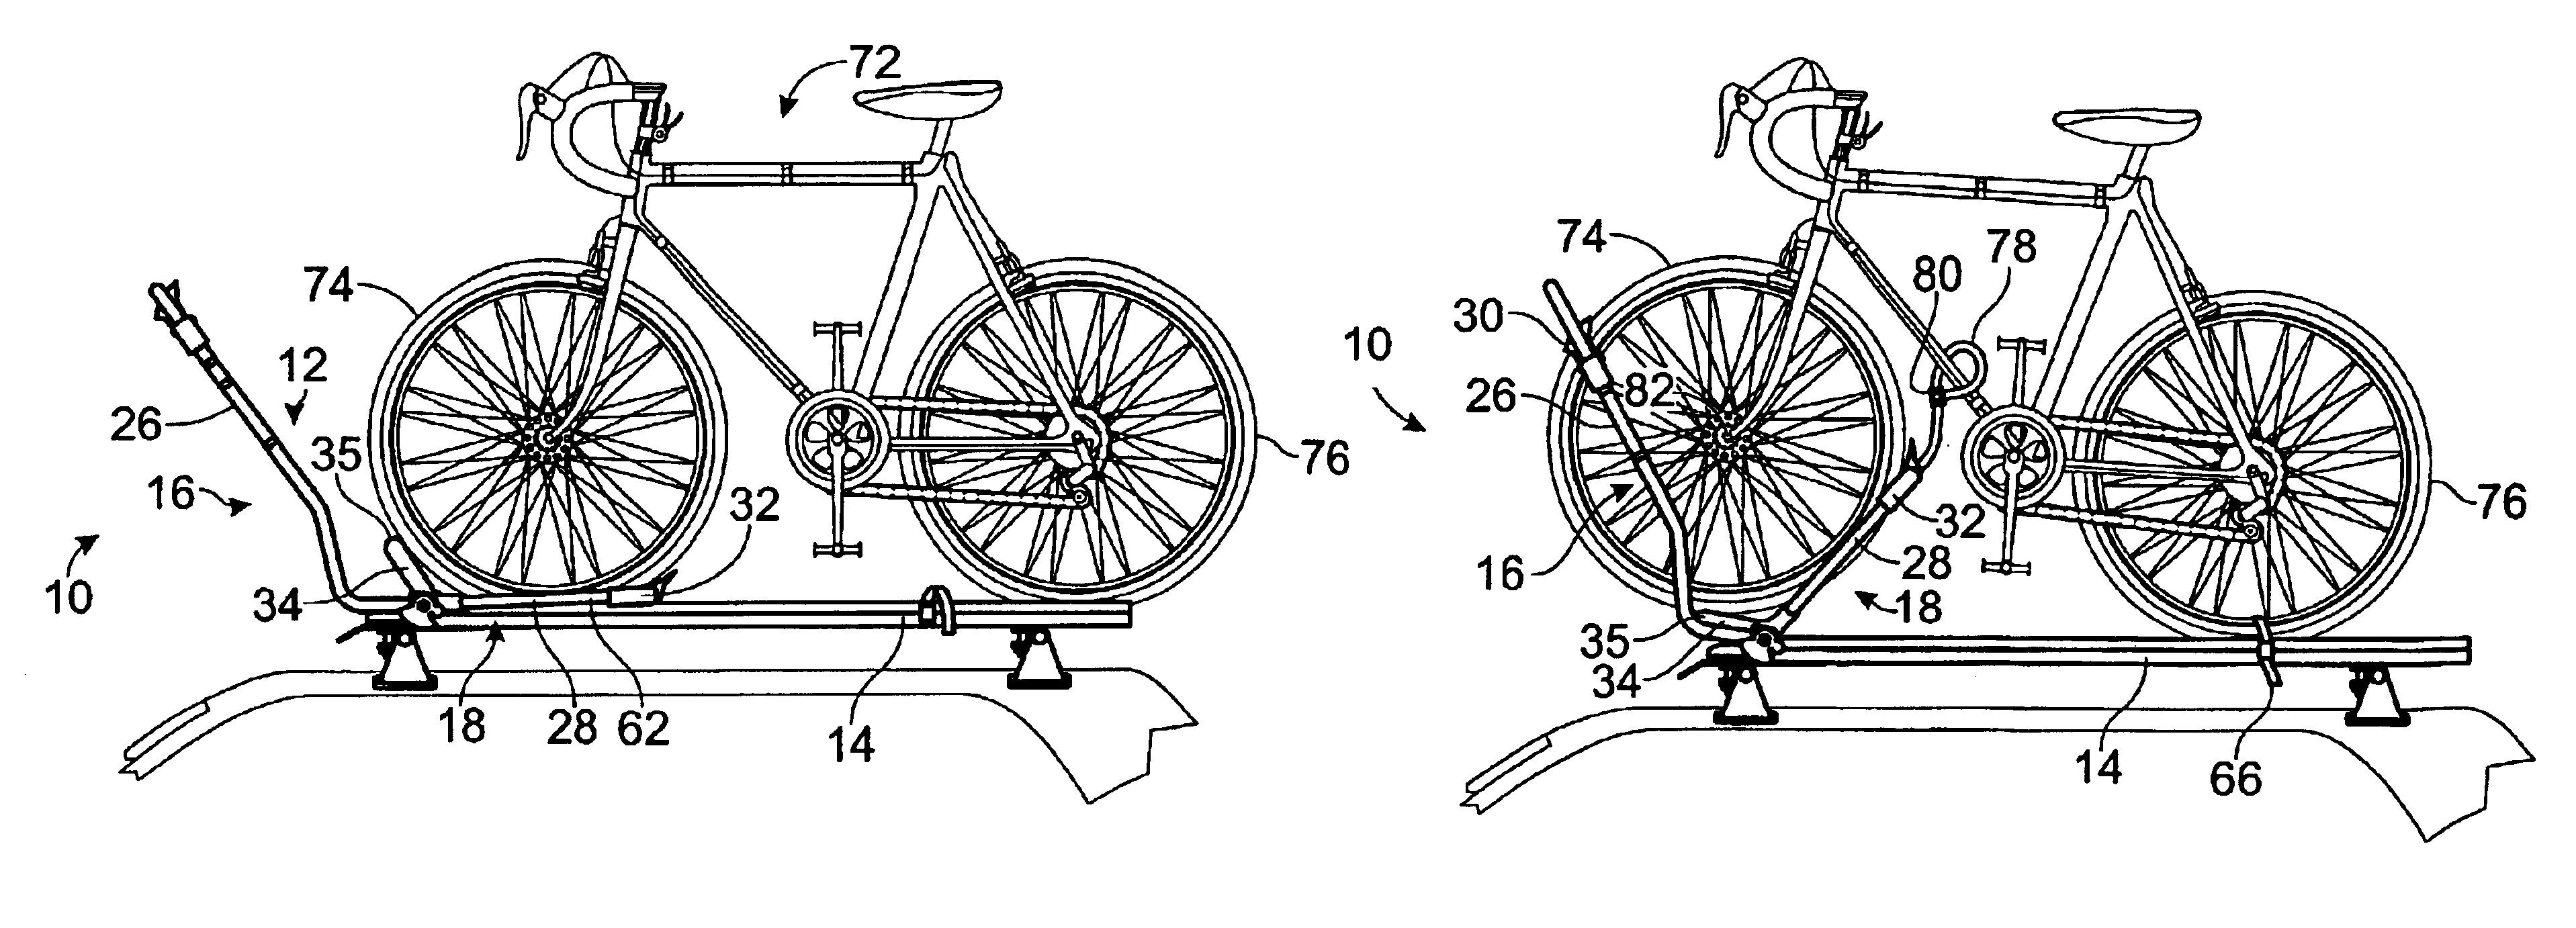 Bike mount